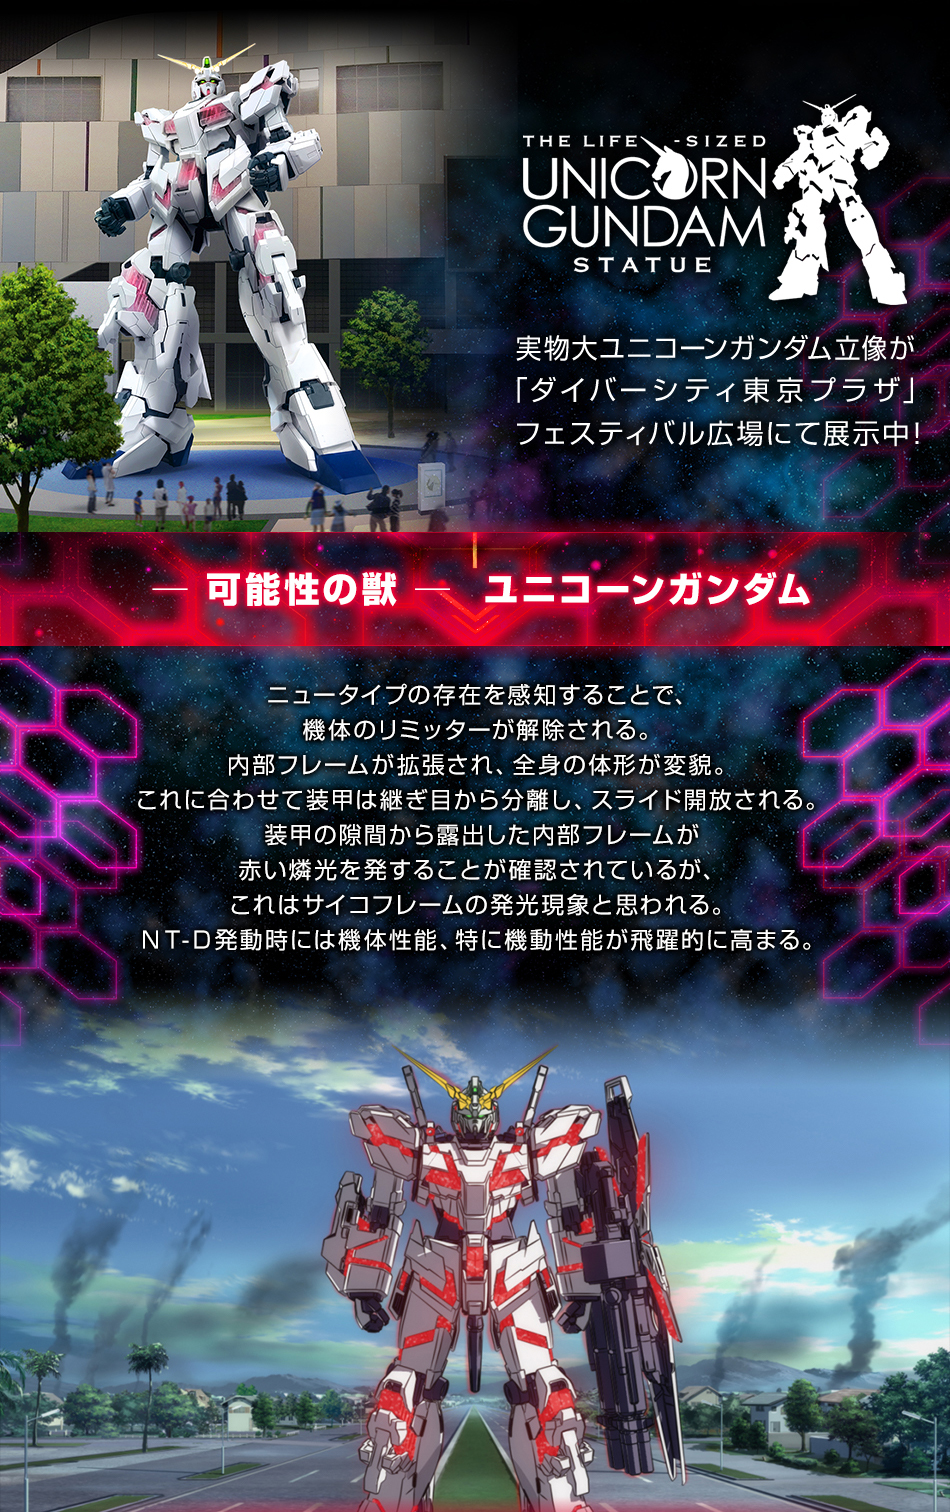 Rg 1 144 ガンダムベース限定 Rx 0 ユニコーンガンダム デストロイモード Ver Twc Lighting Model 商品情報 The Gundam Base ガンダムベース公式サイト